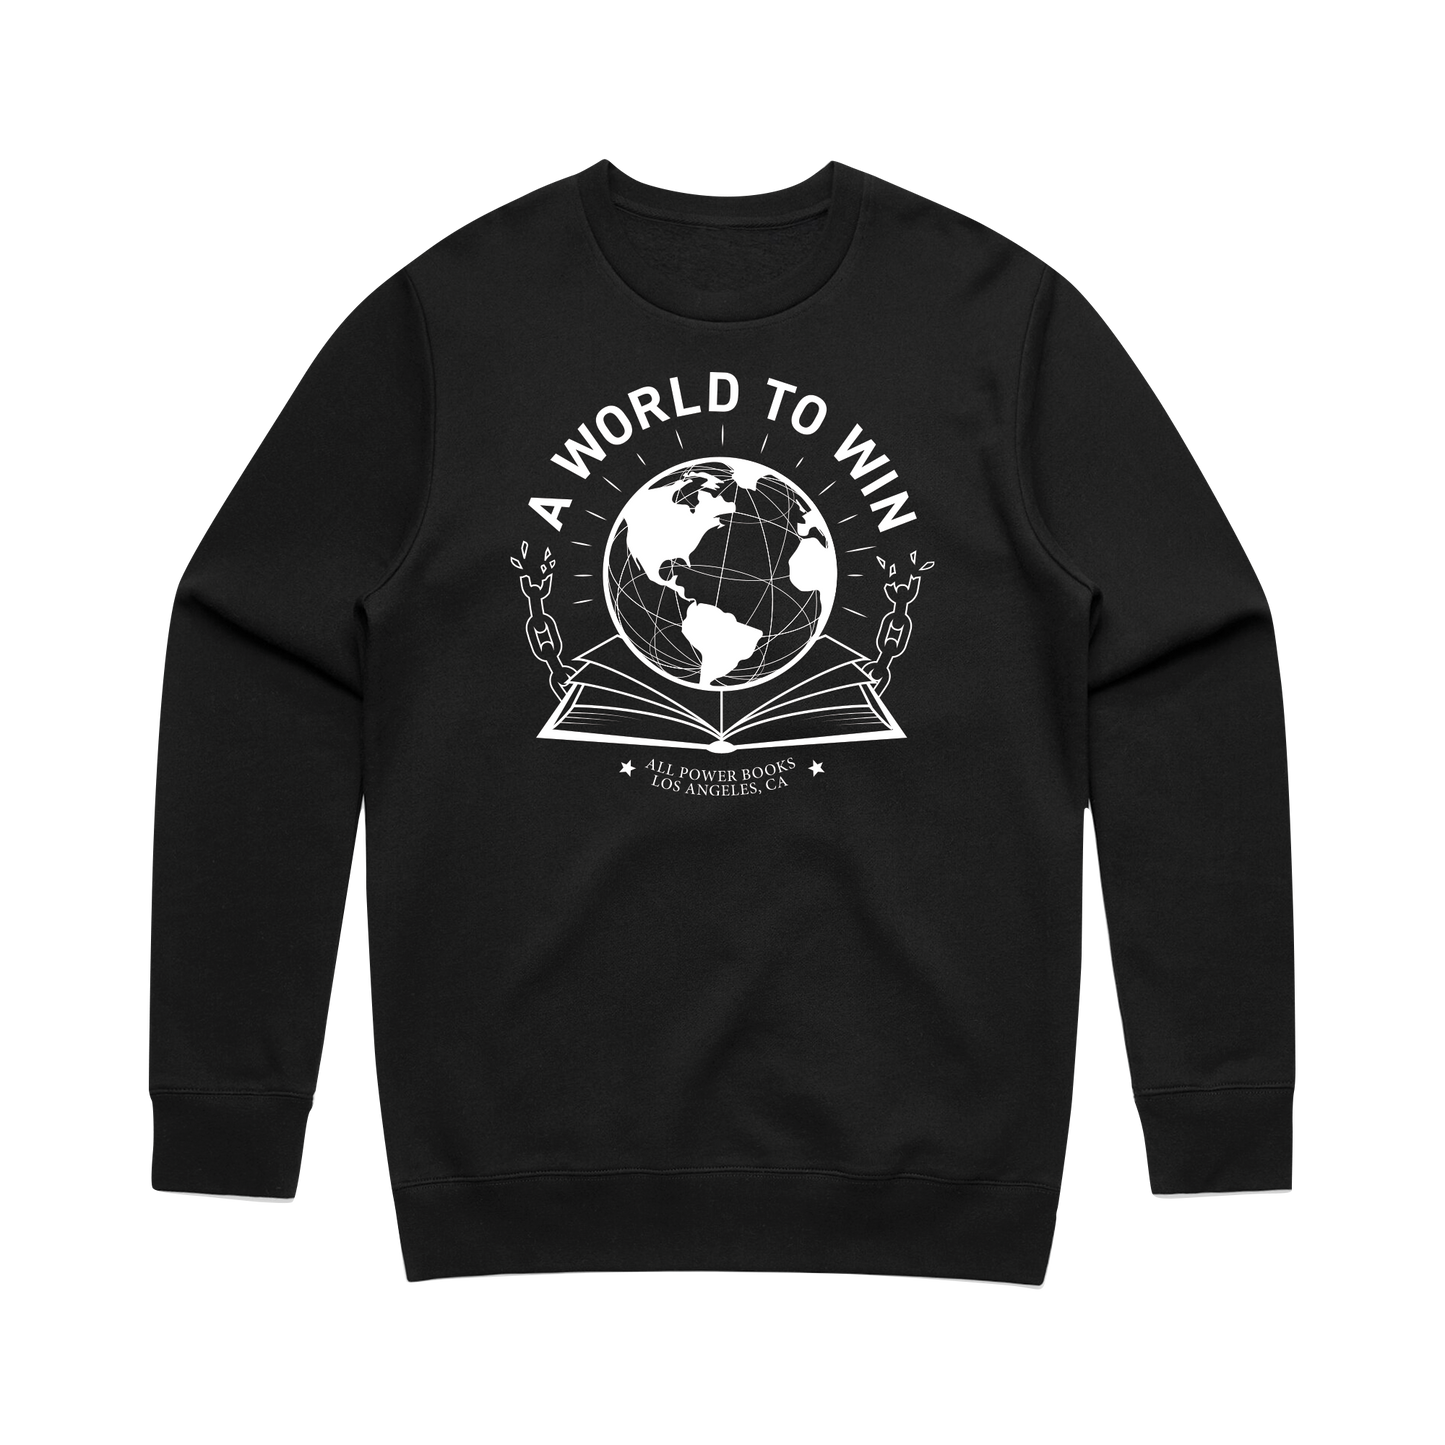 A World to Win Crewneck Sweatshirt